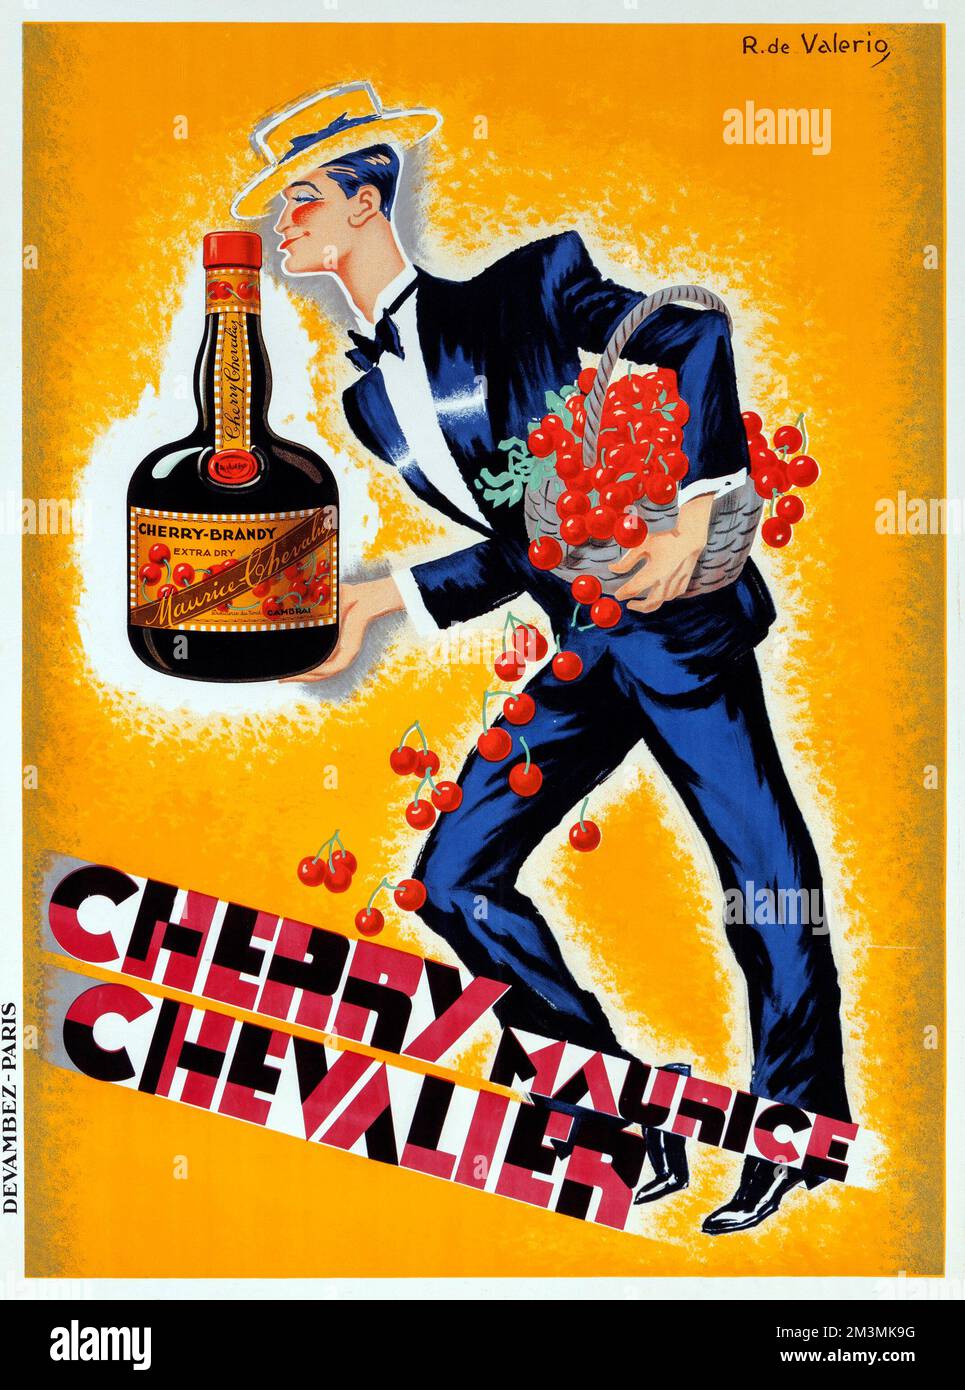 Pubblicità alcool - Roger de Valerio (francese, 1896-1951). Cherry-Brandy, Maurice Chevalier, 1940 Foto Stock